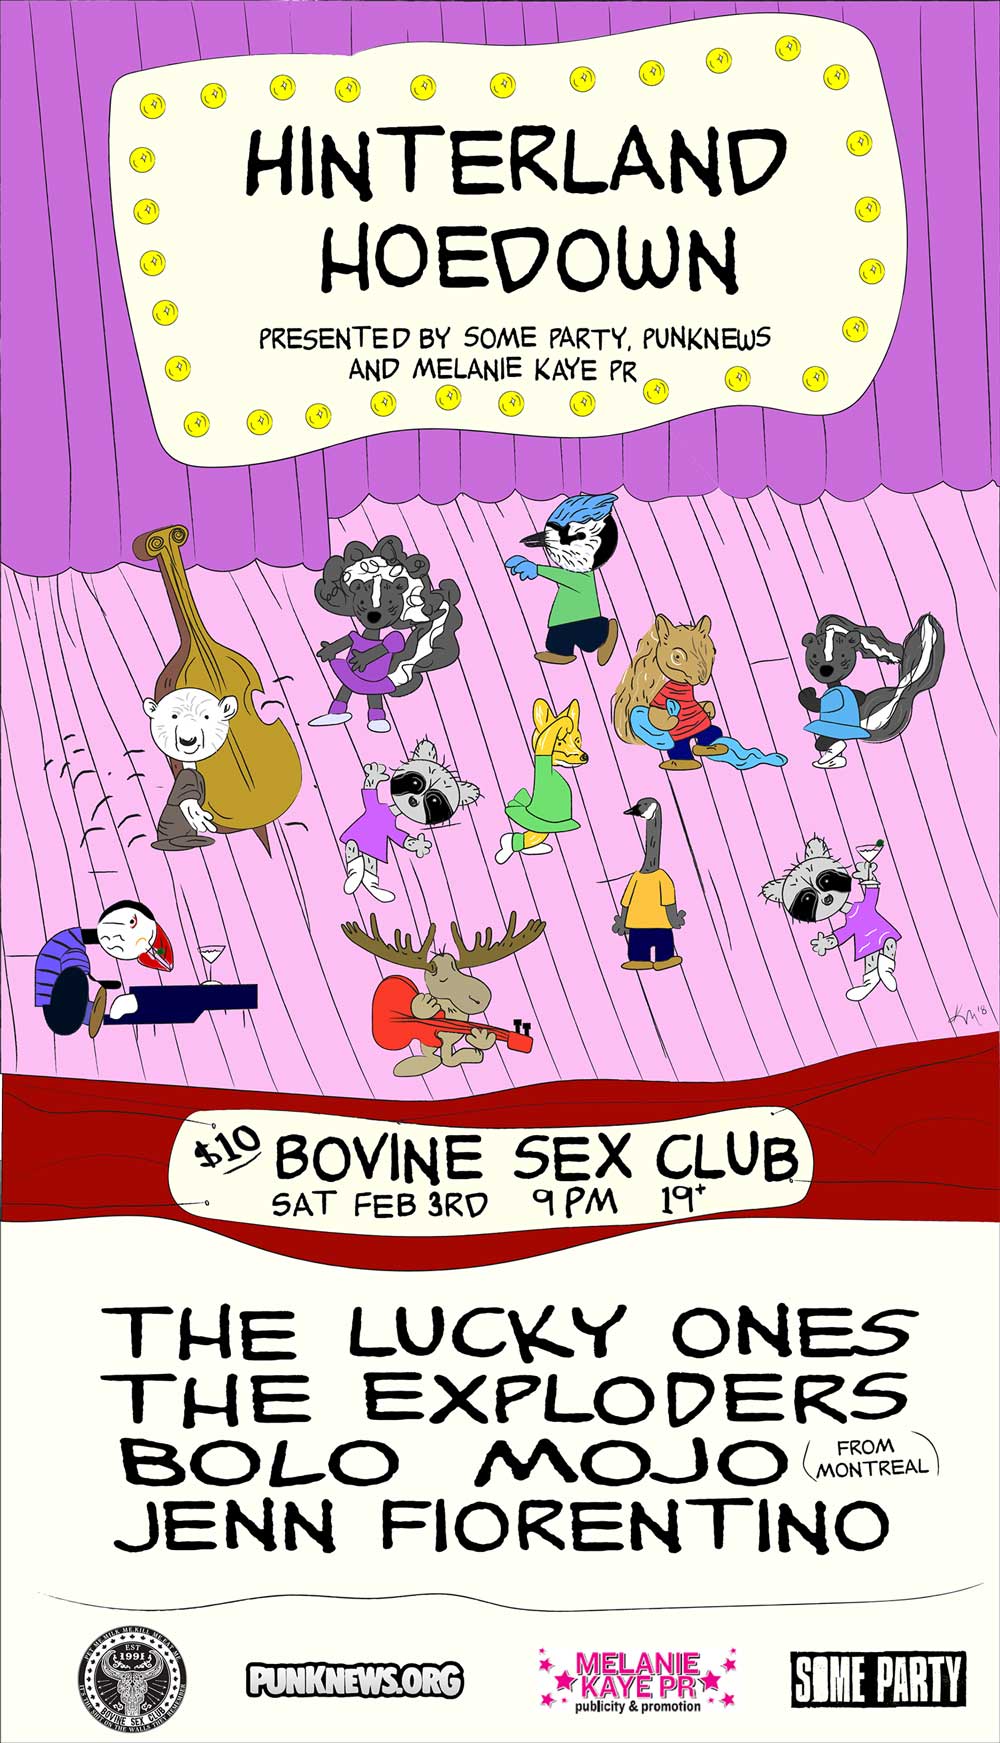 Hinterland Hoedown, February 3, 2018 at the Bovine Sex Club